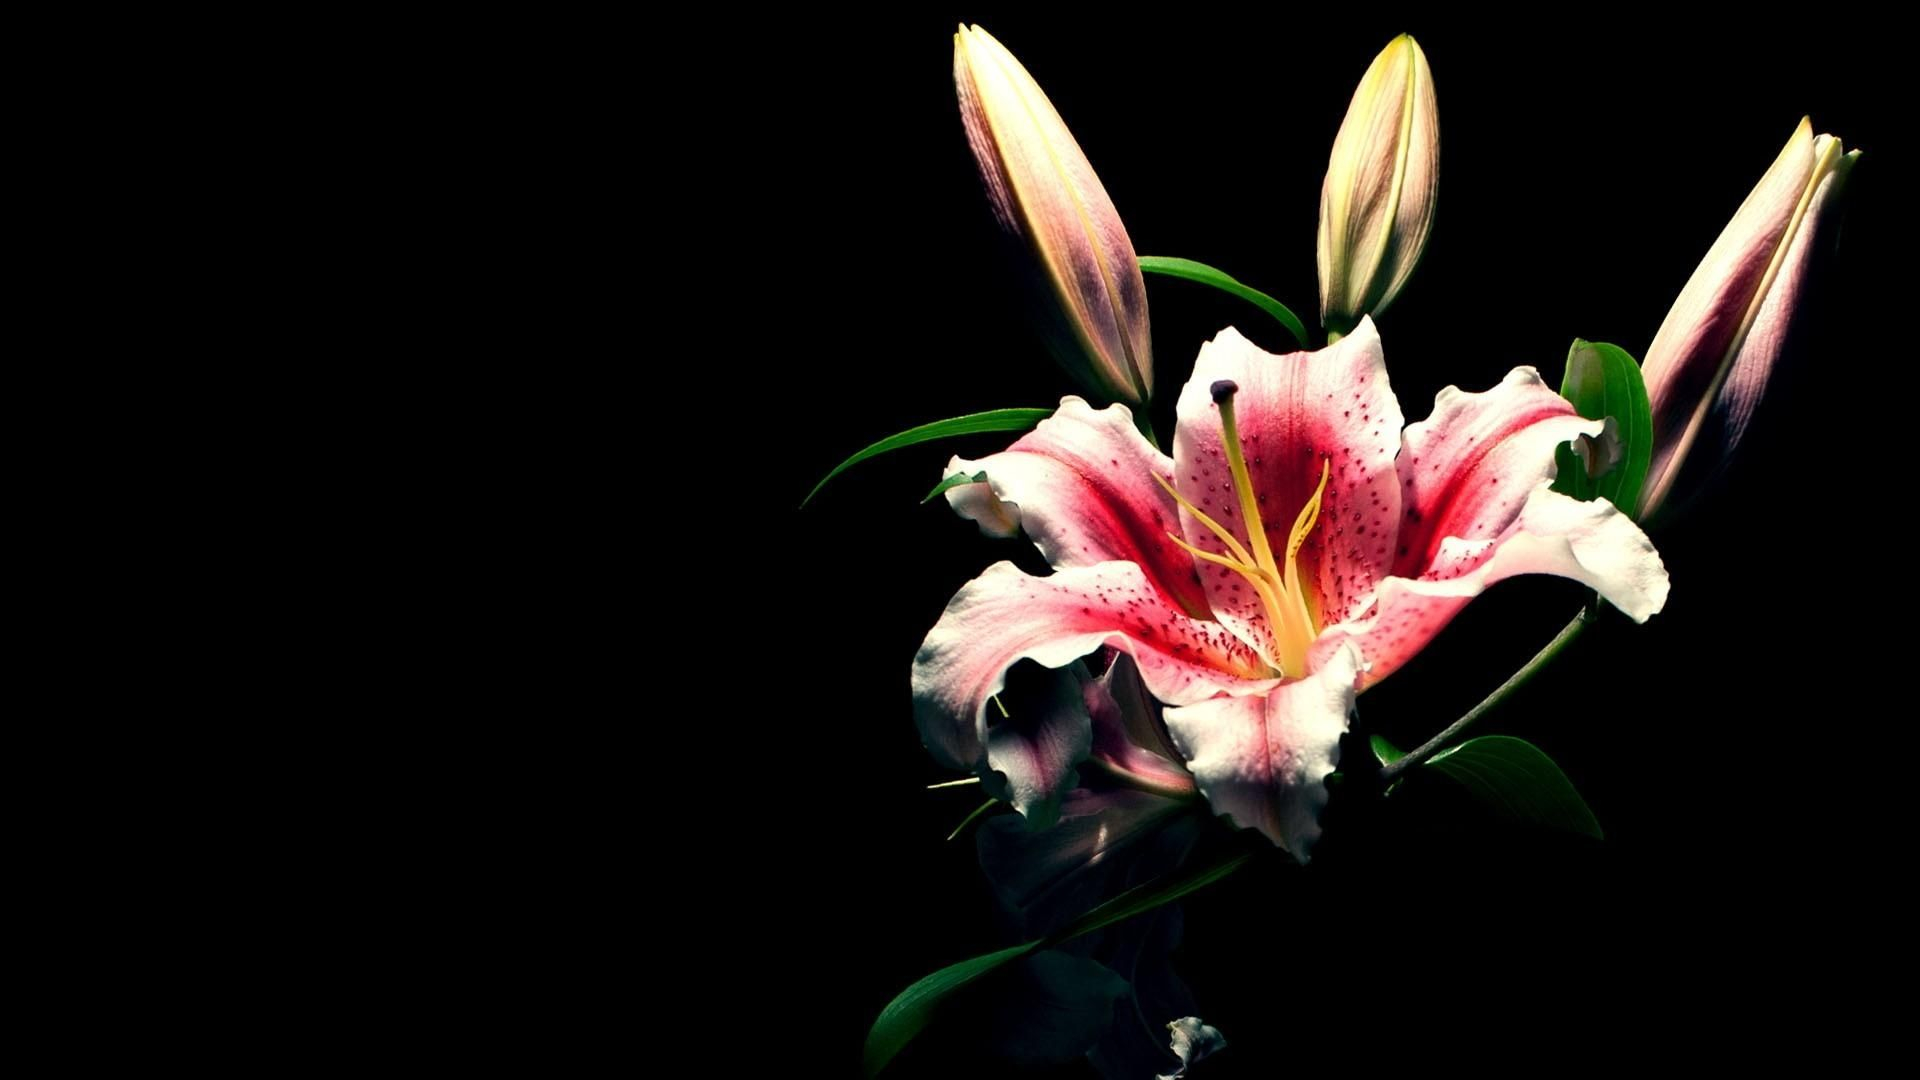 1920x1080 Full HD 1080p Lily Wallpapers HD, Desktop Backgrounds ... | Lily wallpaper, Flower images wallpapers, Flowers black background